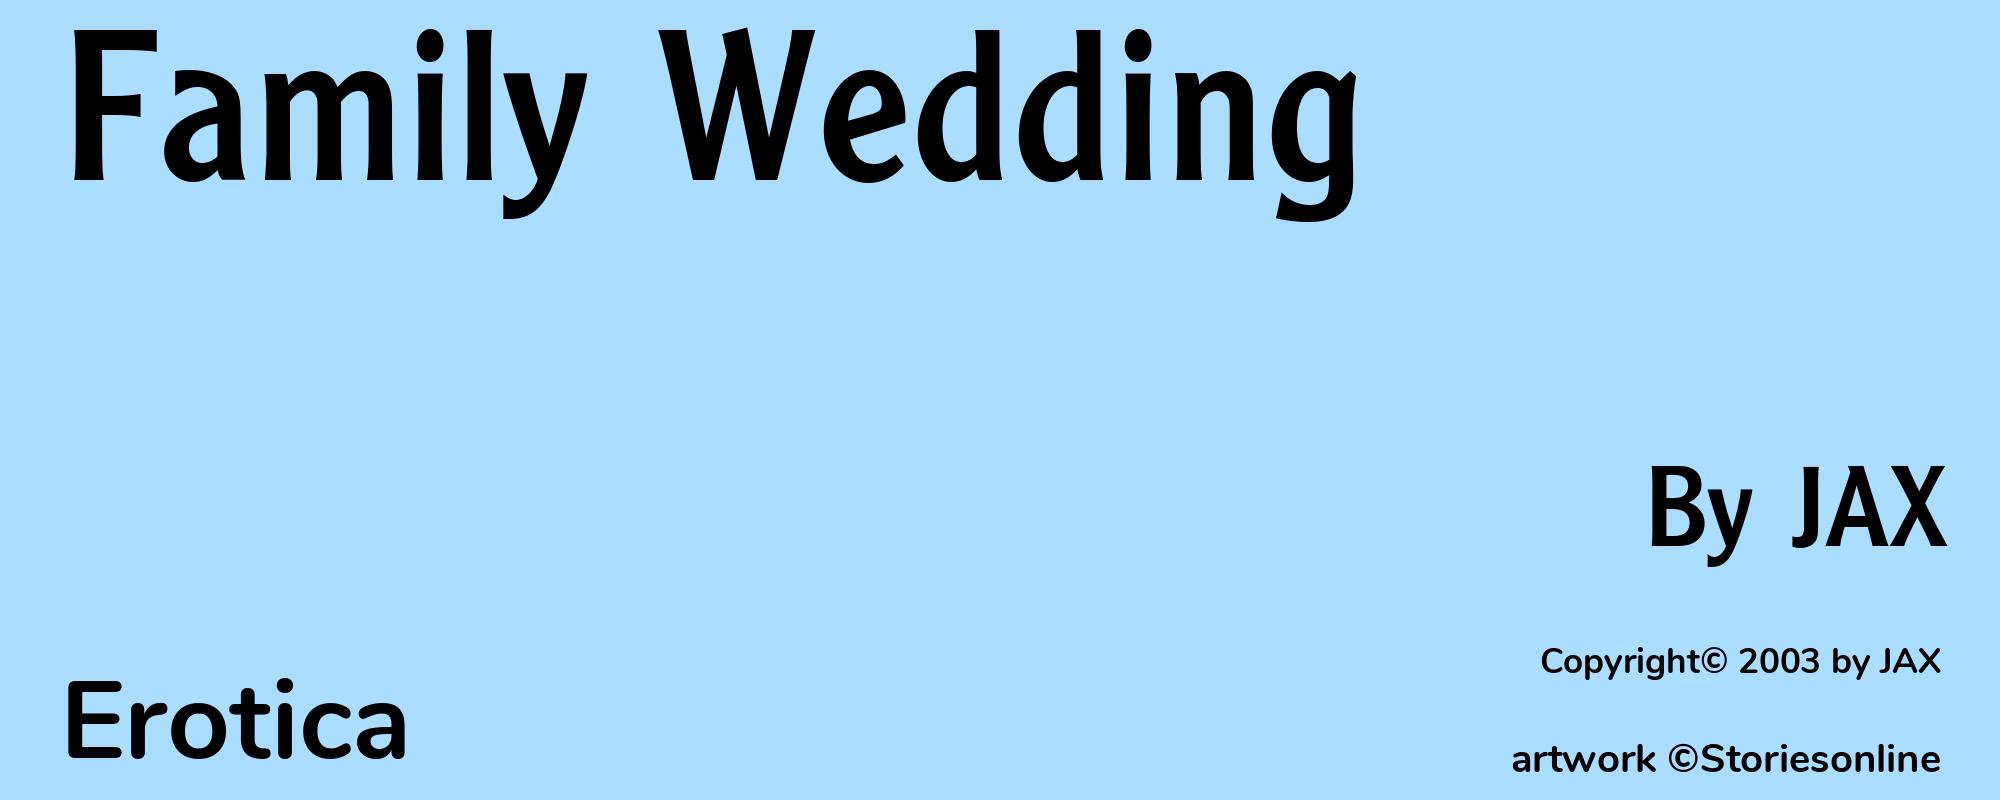 Family Wedding - Cover